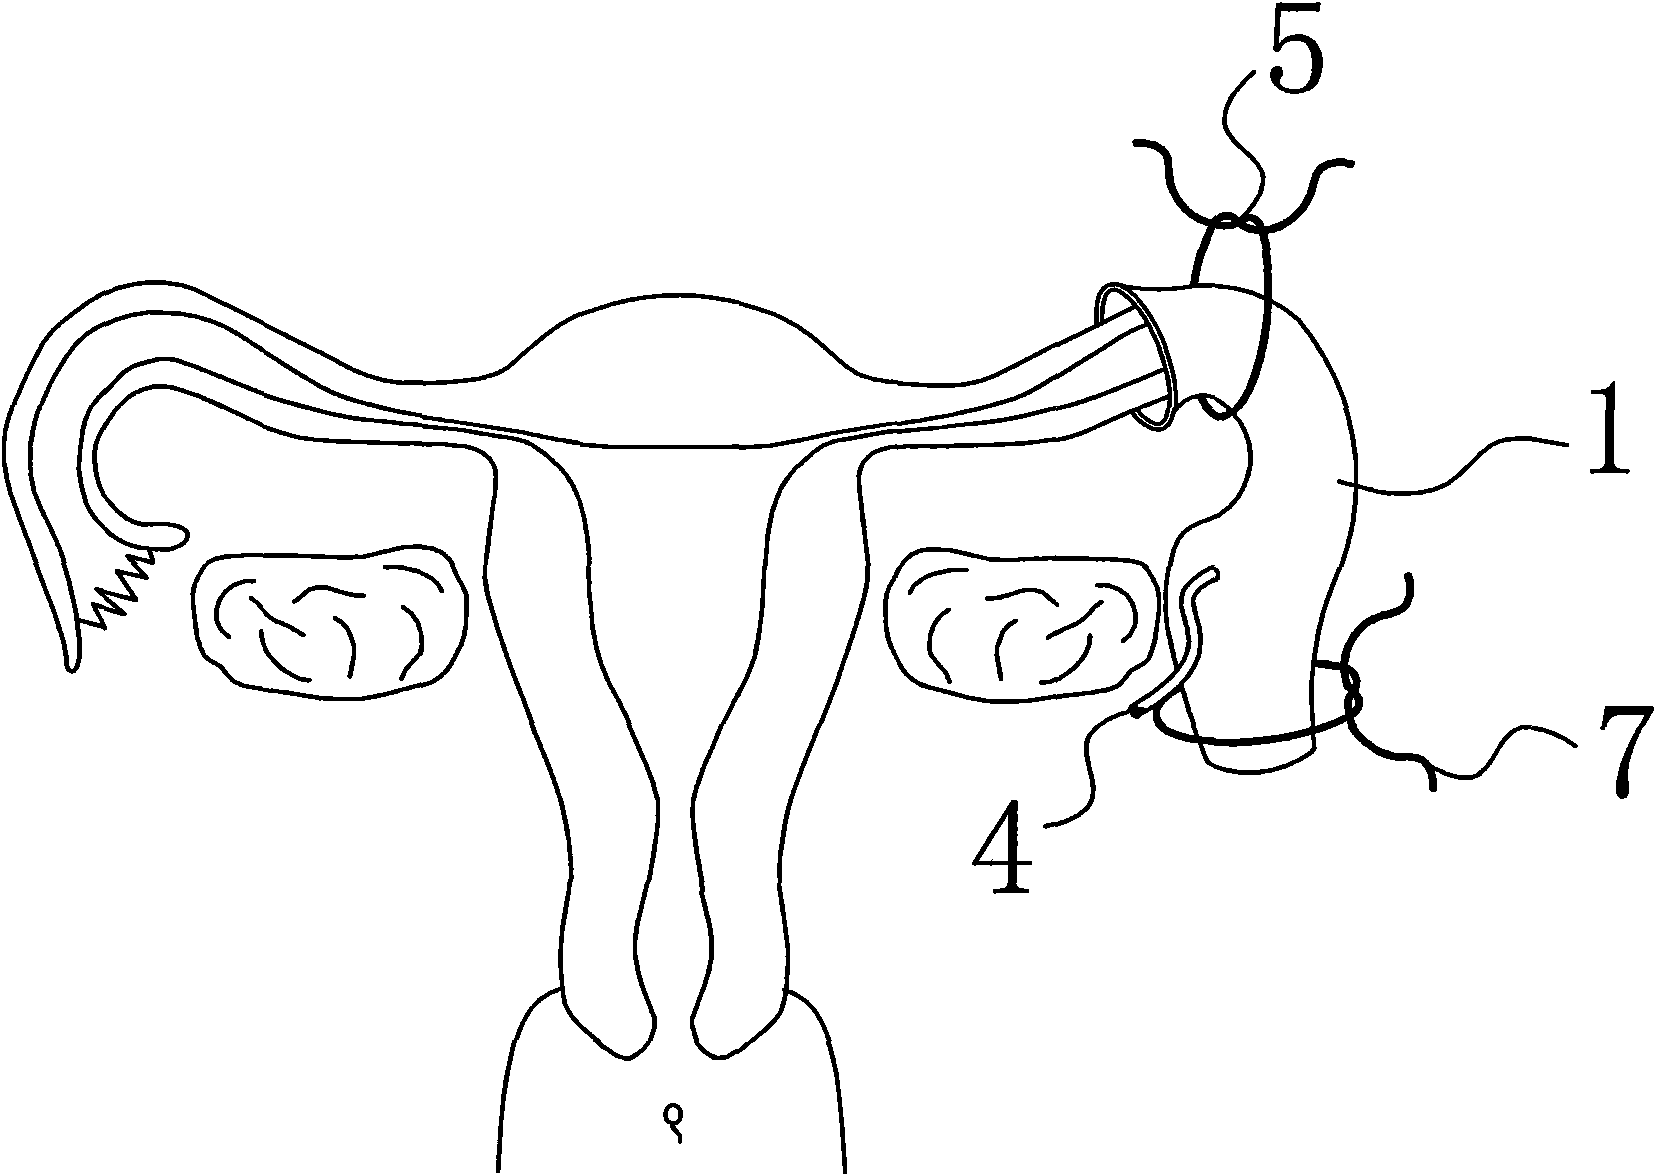 Reducible uterine tube birth control sleeve